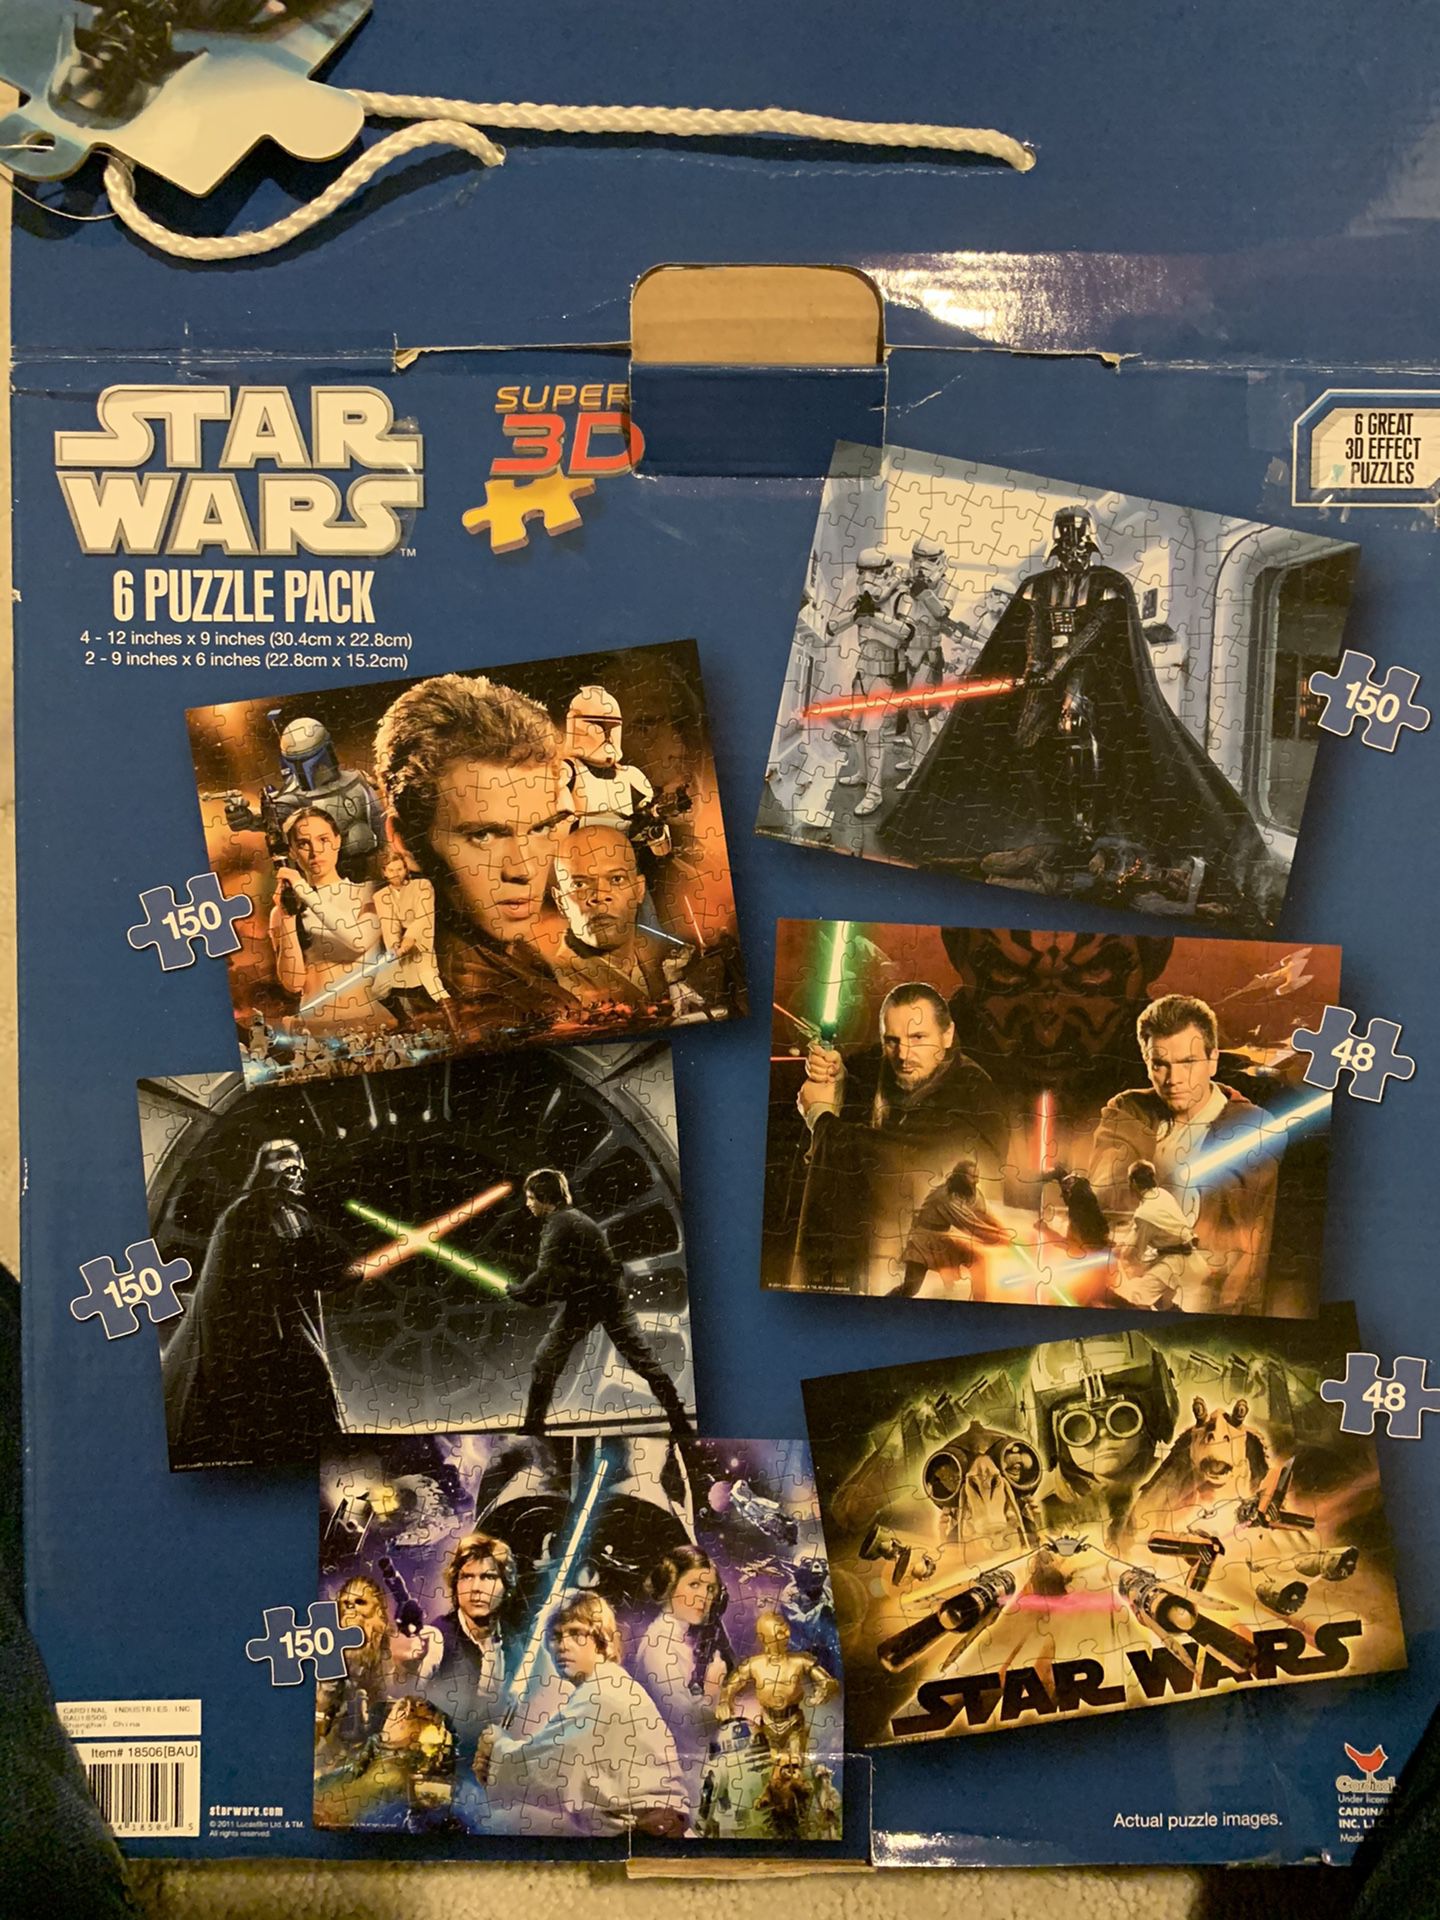 Star Wars 3D six puzzle set